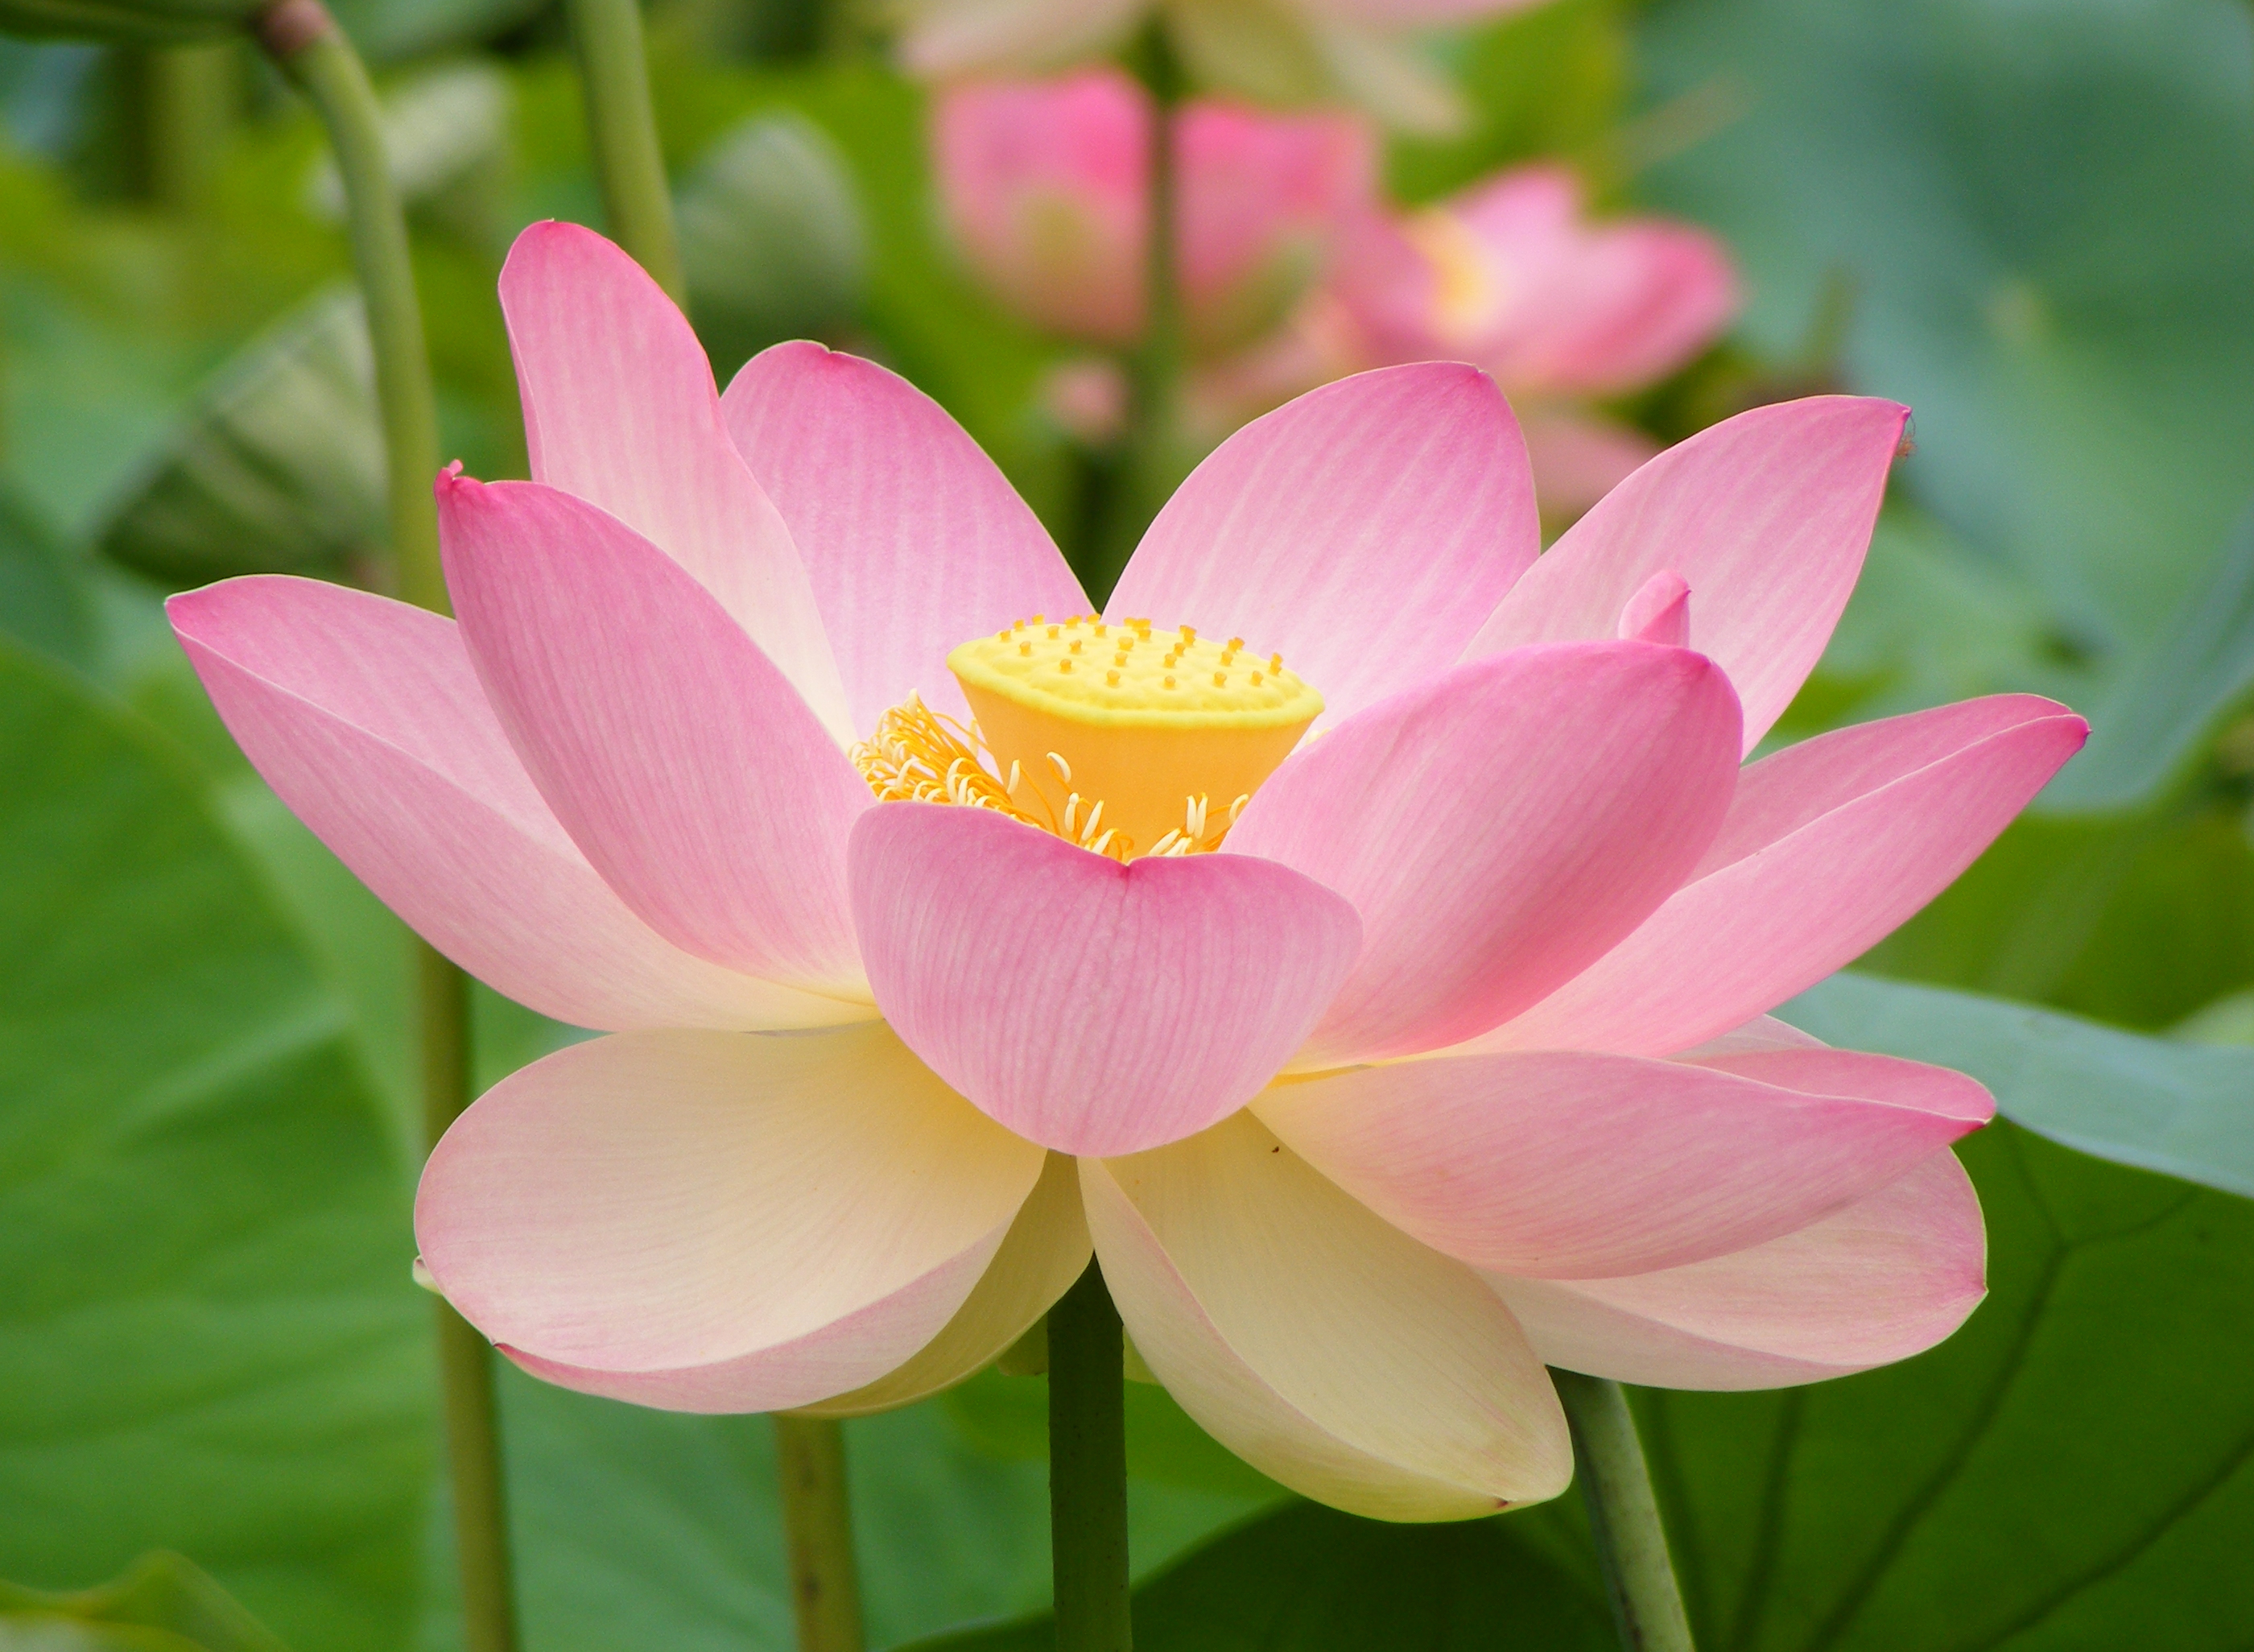 Lotus flower images, picture download - Lotus flower NeotericIT.com